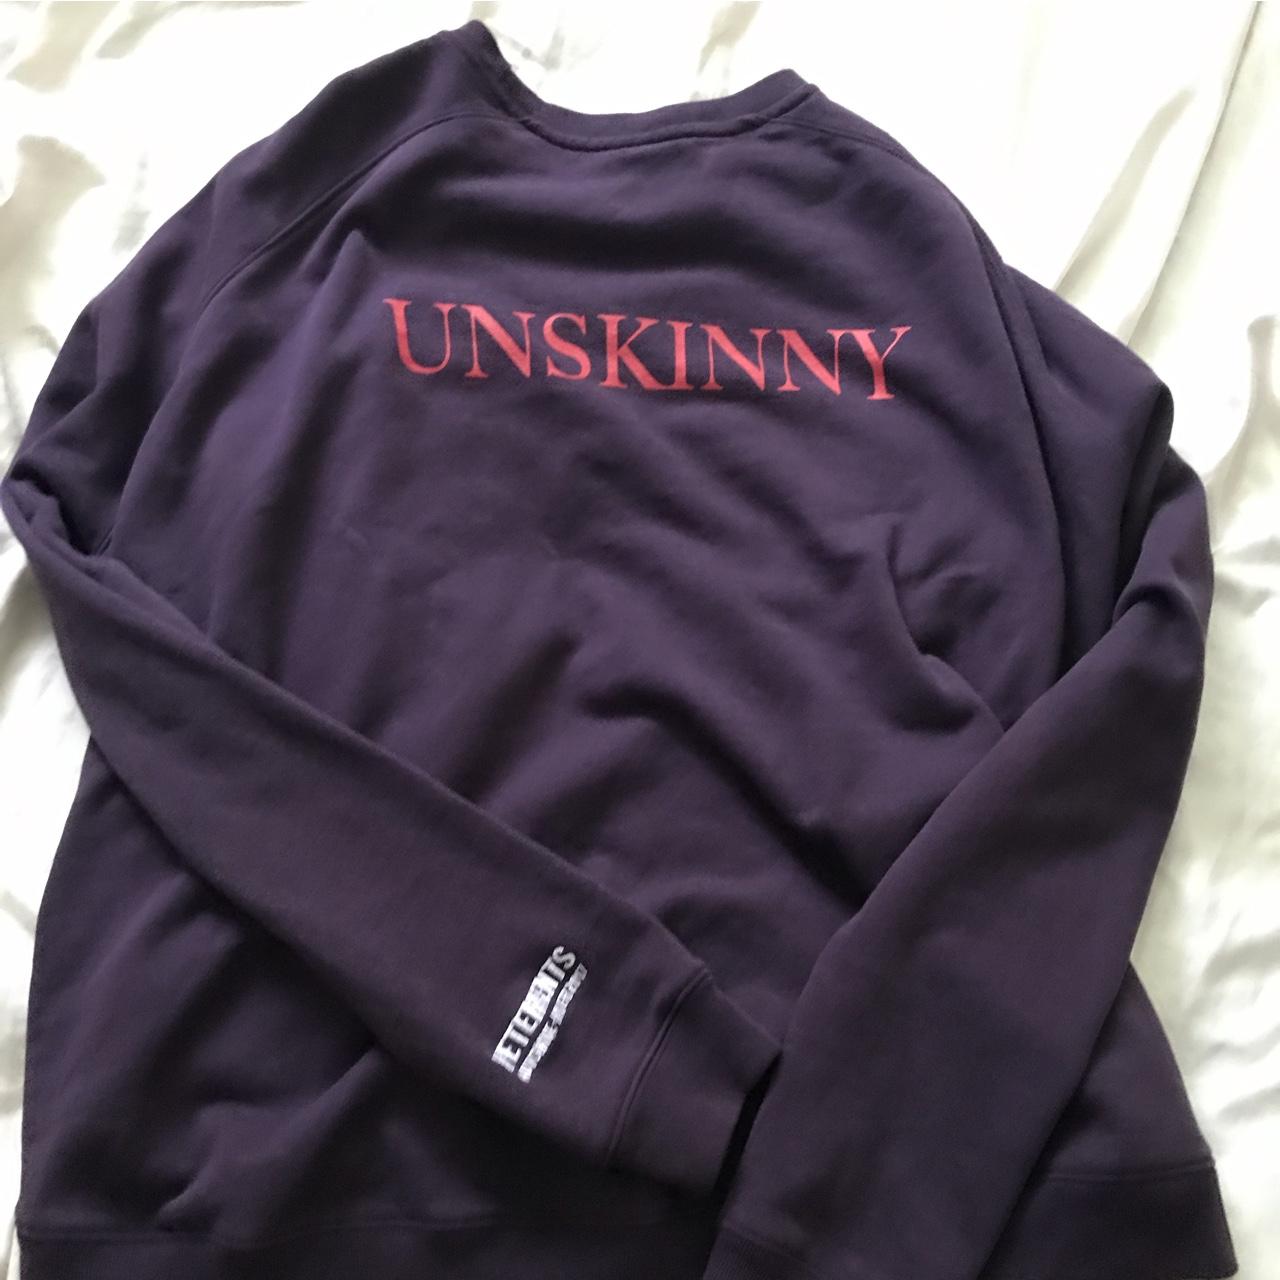 Vetements 17, Unskinny sweatshirt , Size XS fits Like a L